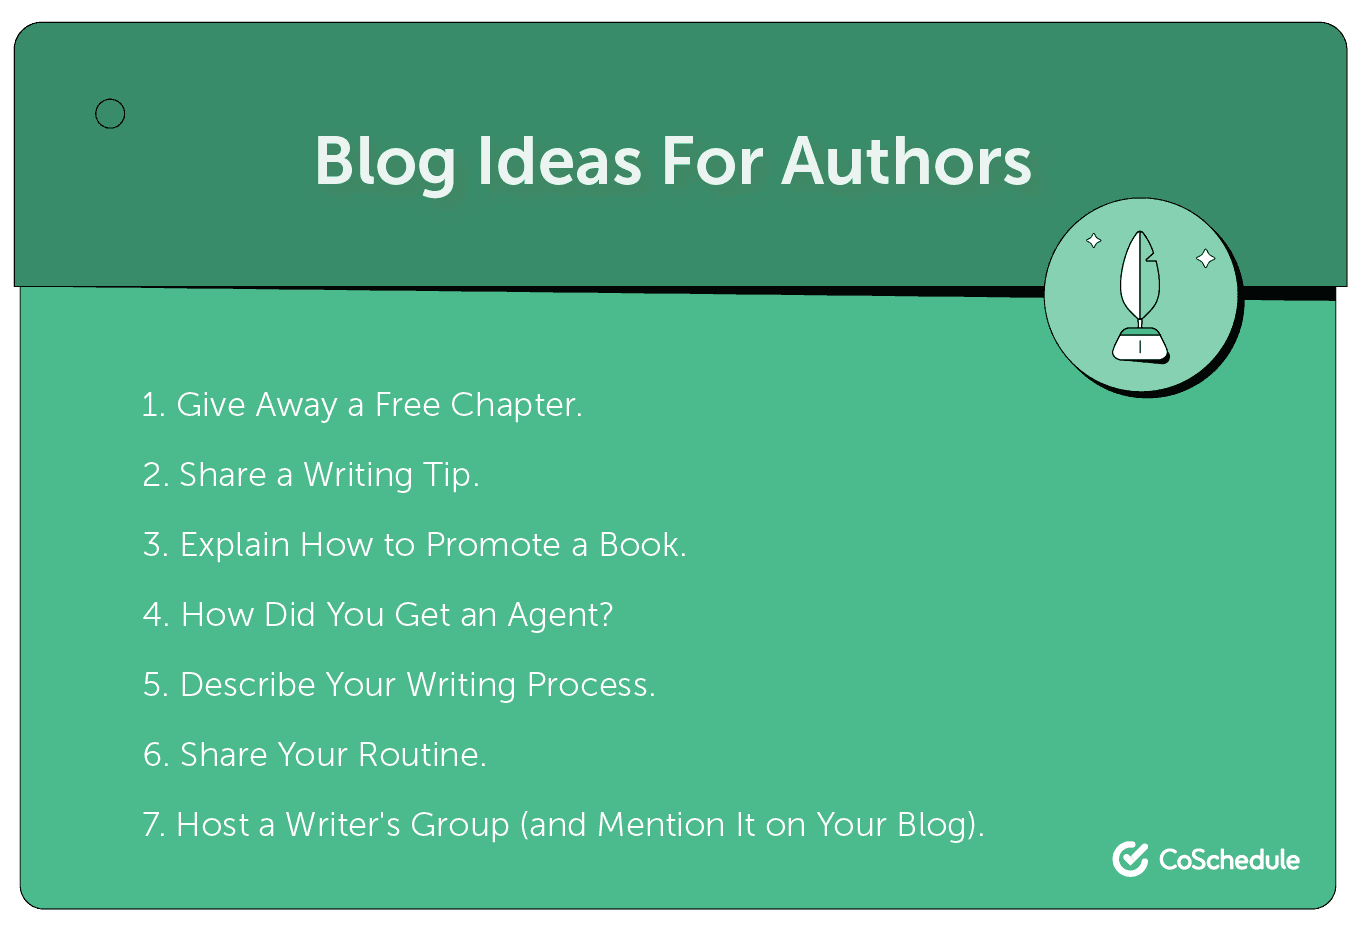 Blog ideas for authors.